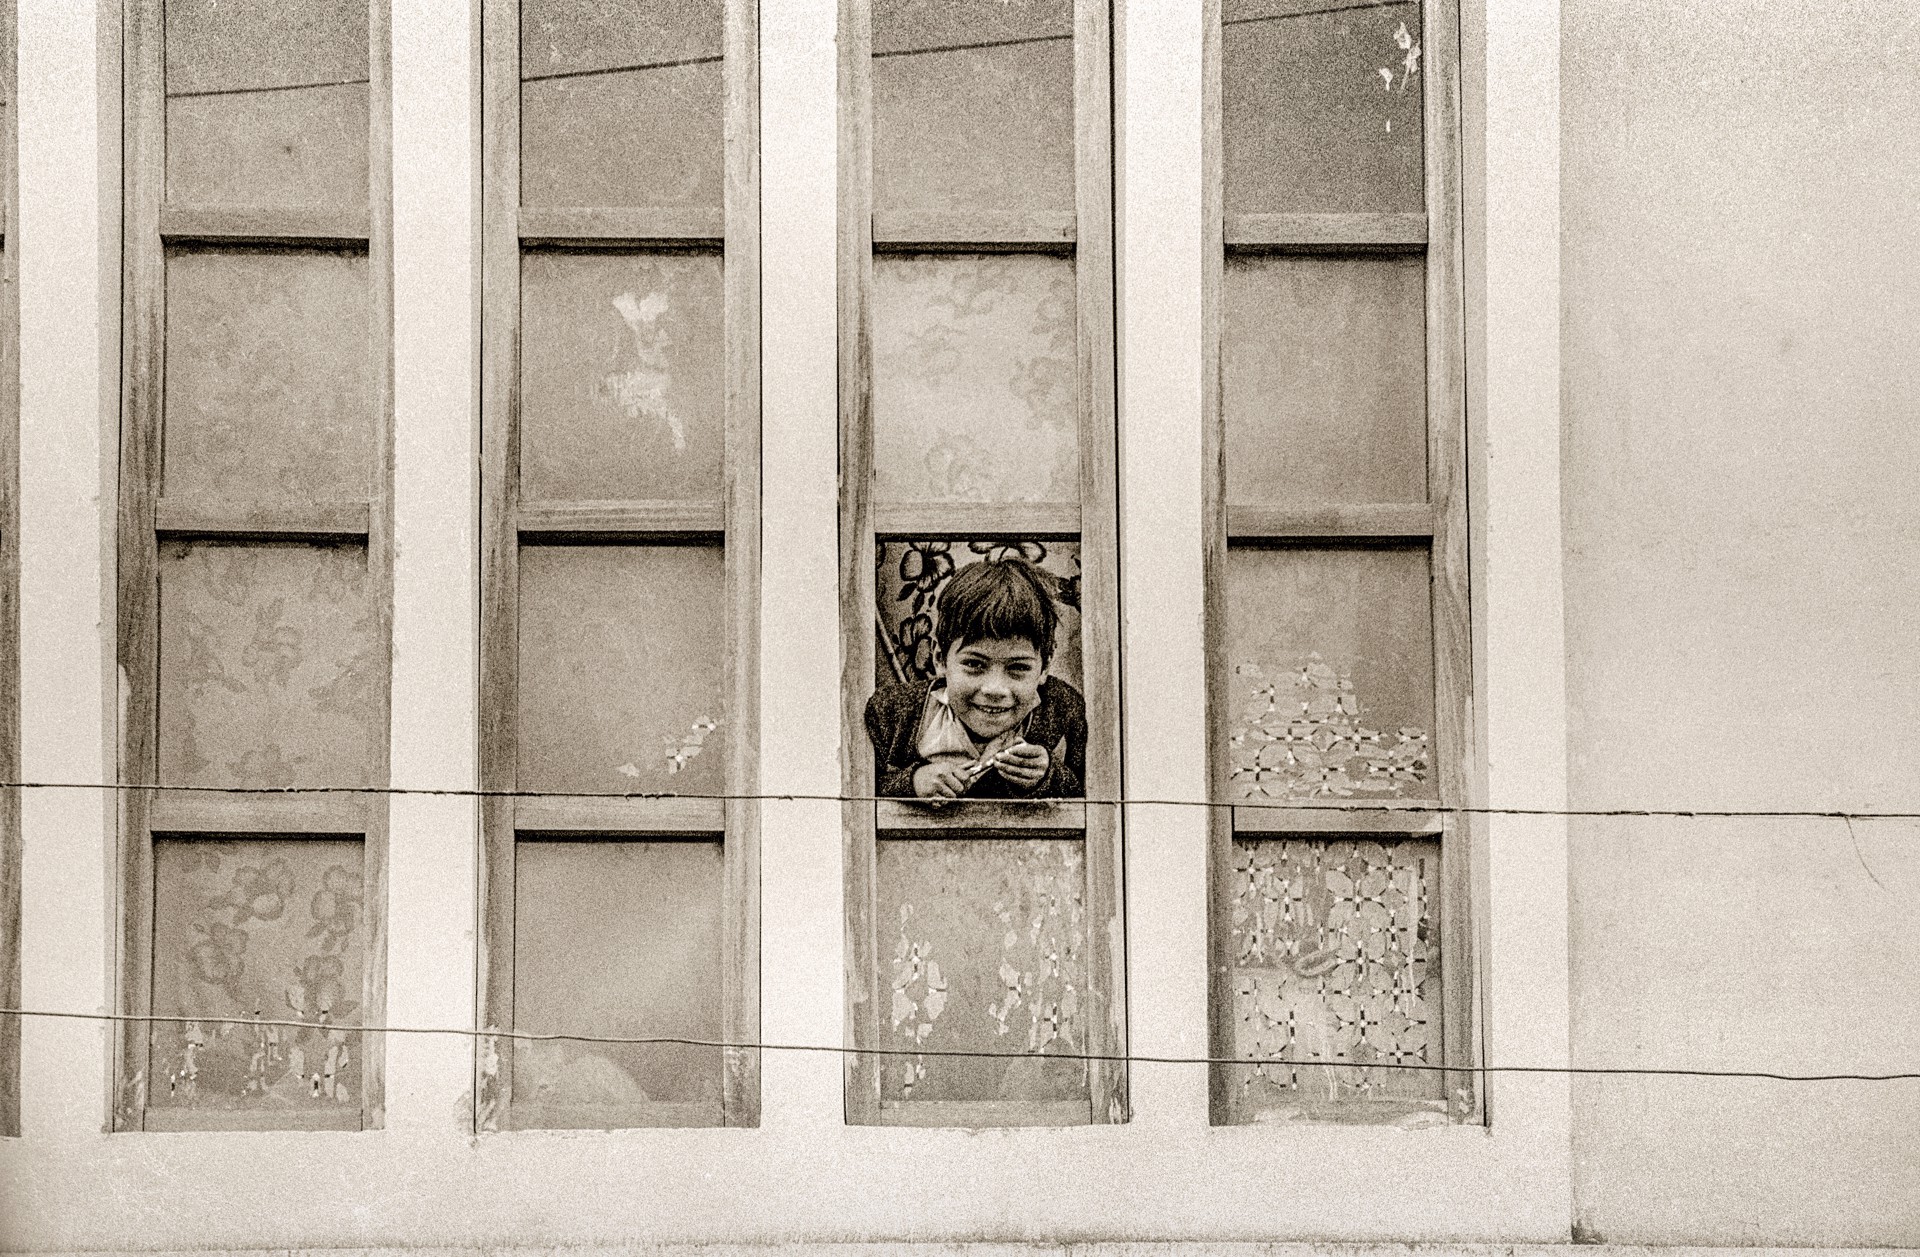 Boy in Windows, Framed (042) by Jack Dempsey